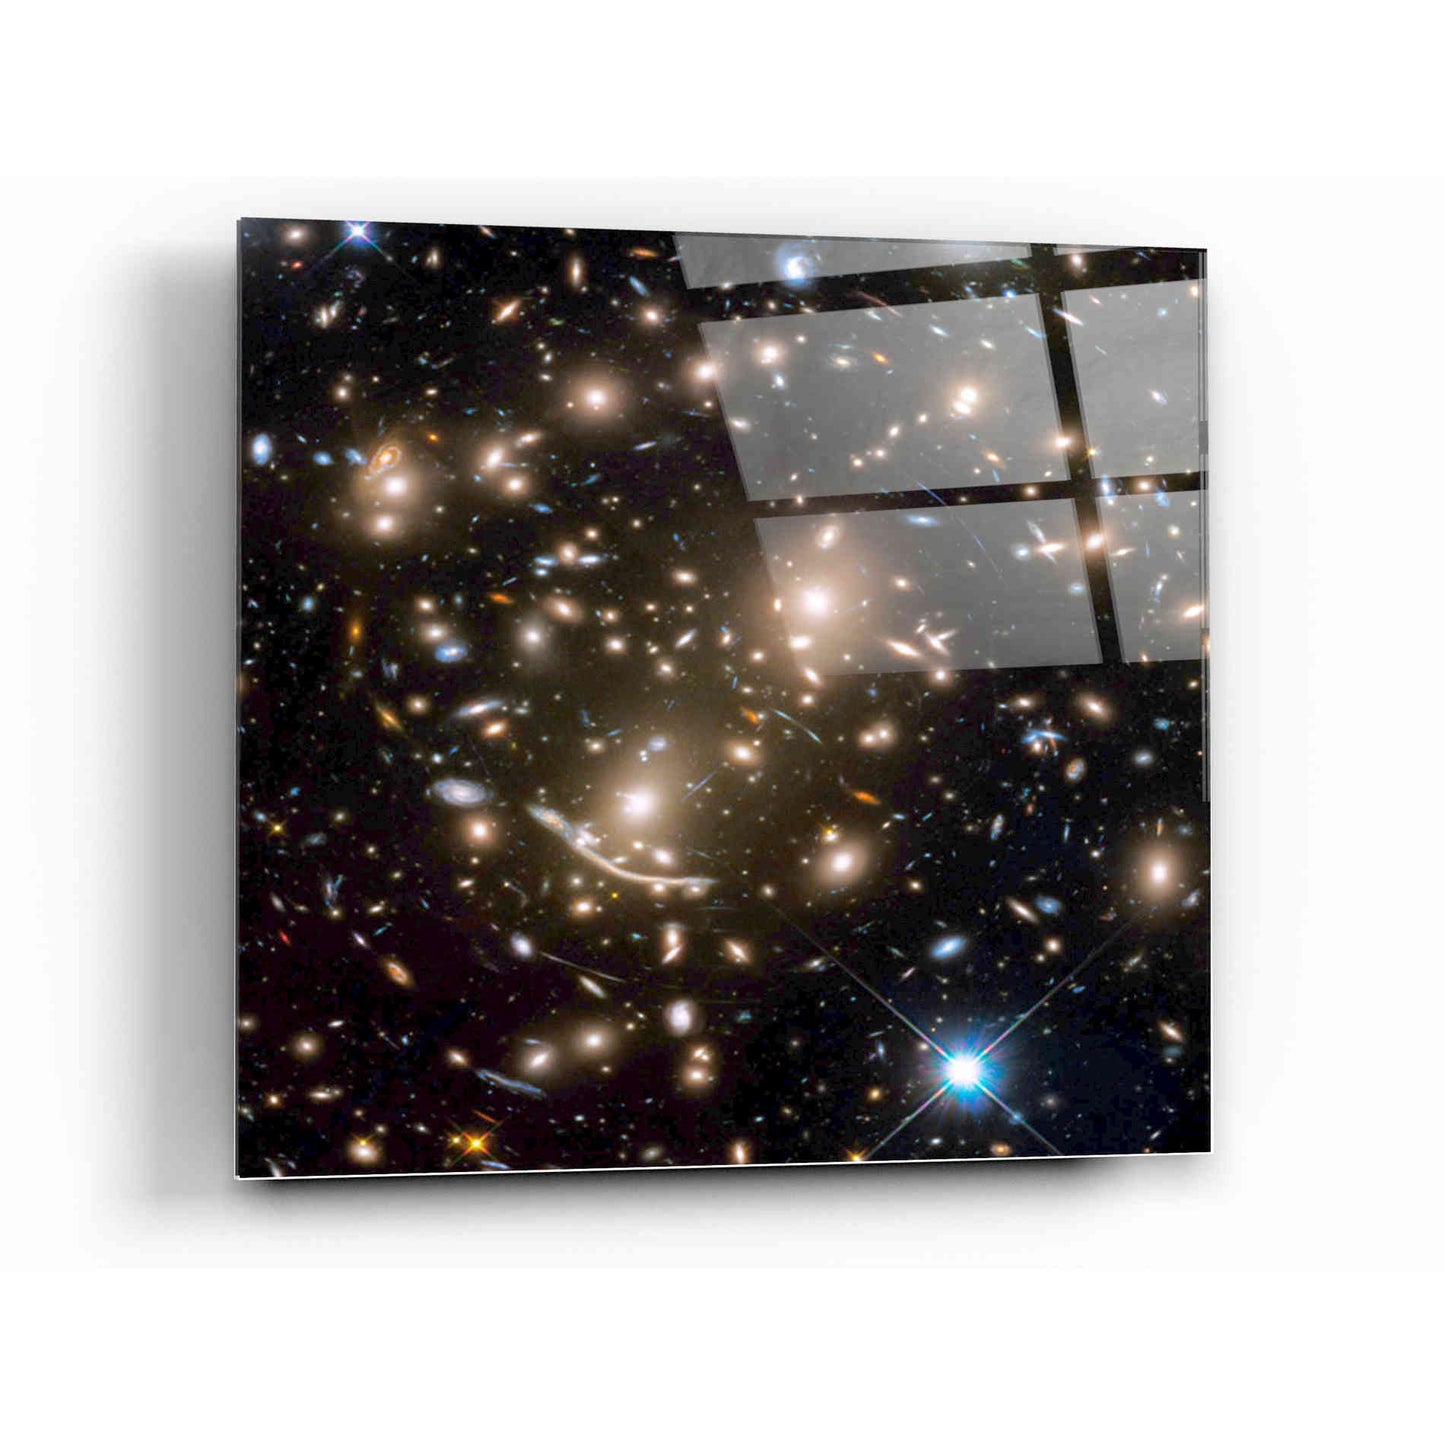 Epic Art "Abell 370" Hubble Space Telescope Acrylic Glass Wall Art,12 x 12